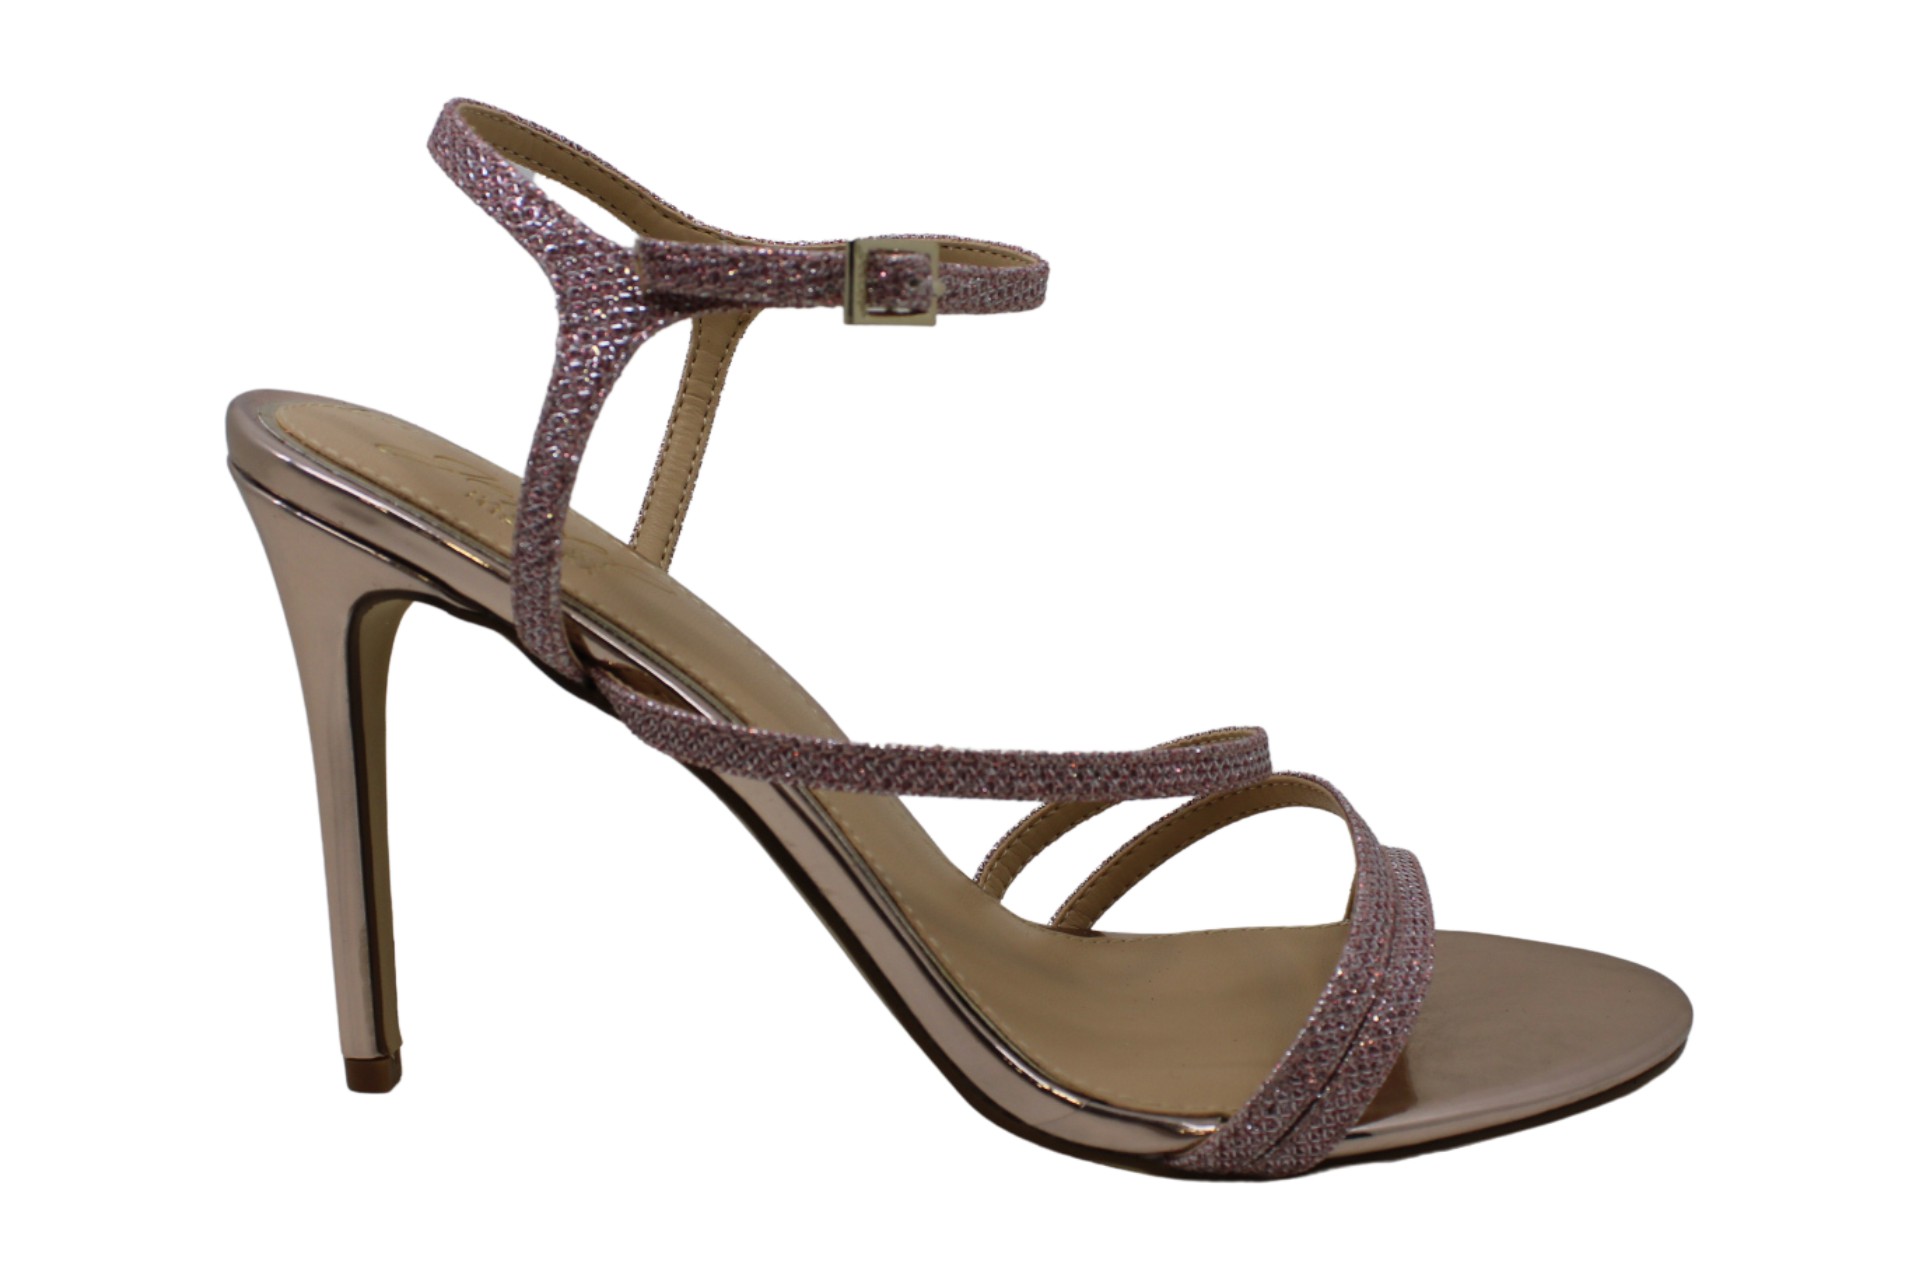 Jewel Badgley Mischka Women's Maddison Sandal,, Rosegold Glitter, Size 8.0